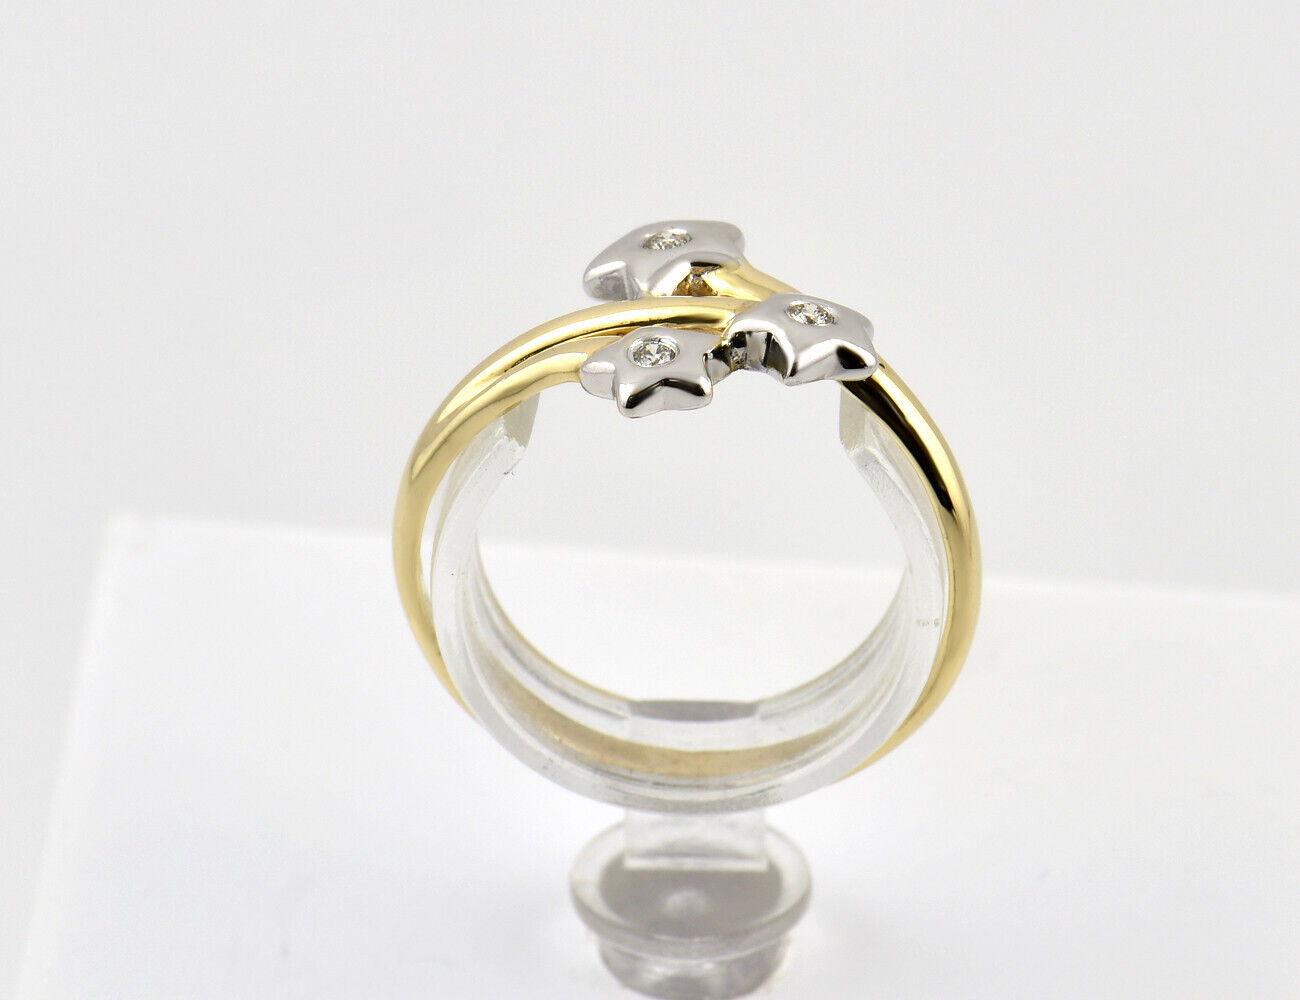 Diamant Ring 333/000 8 K Gelbgold 3 Brillanten zus. 0,04 ct